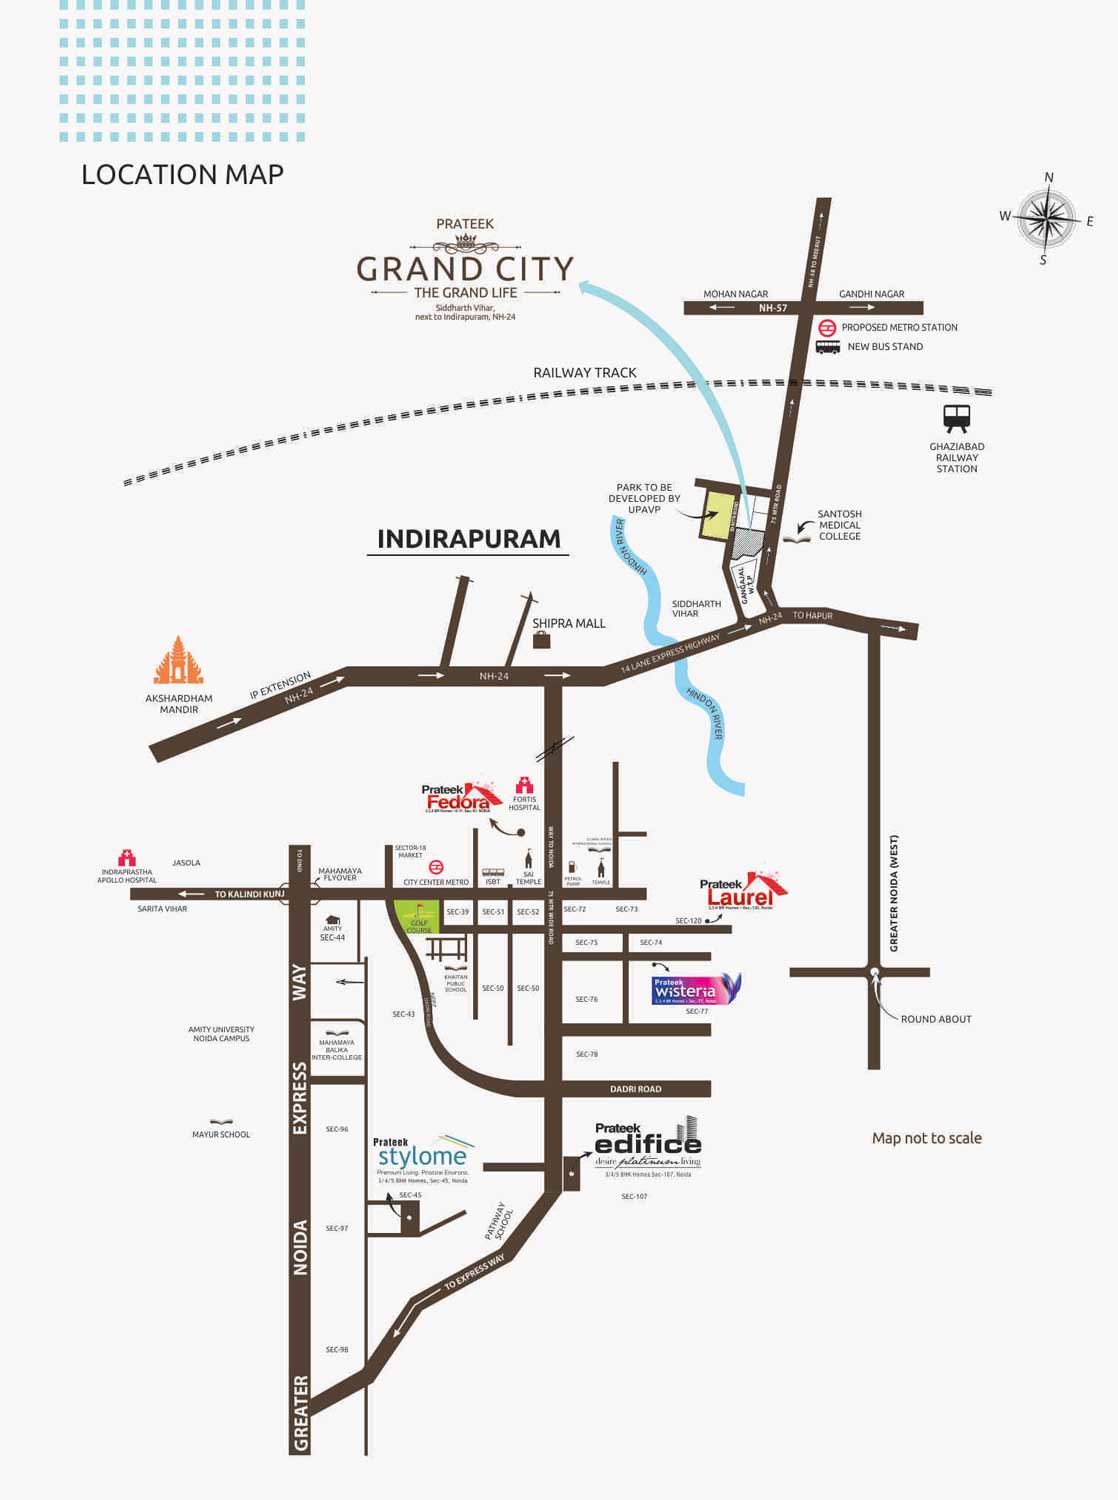 Prateek Grand City Location Map